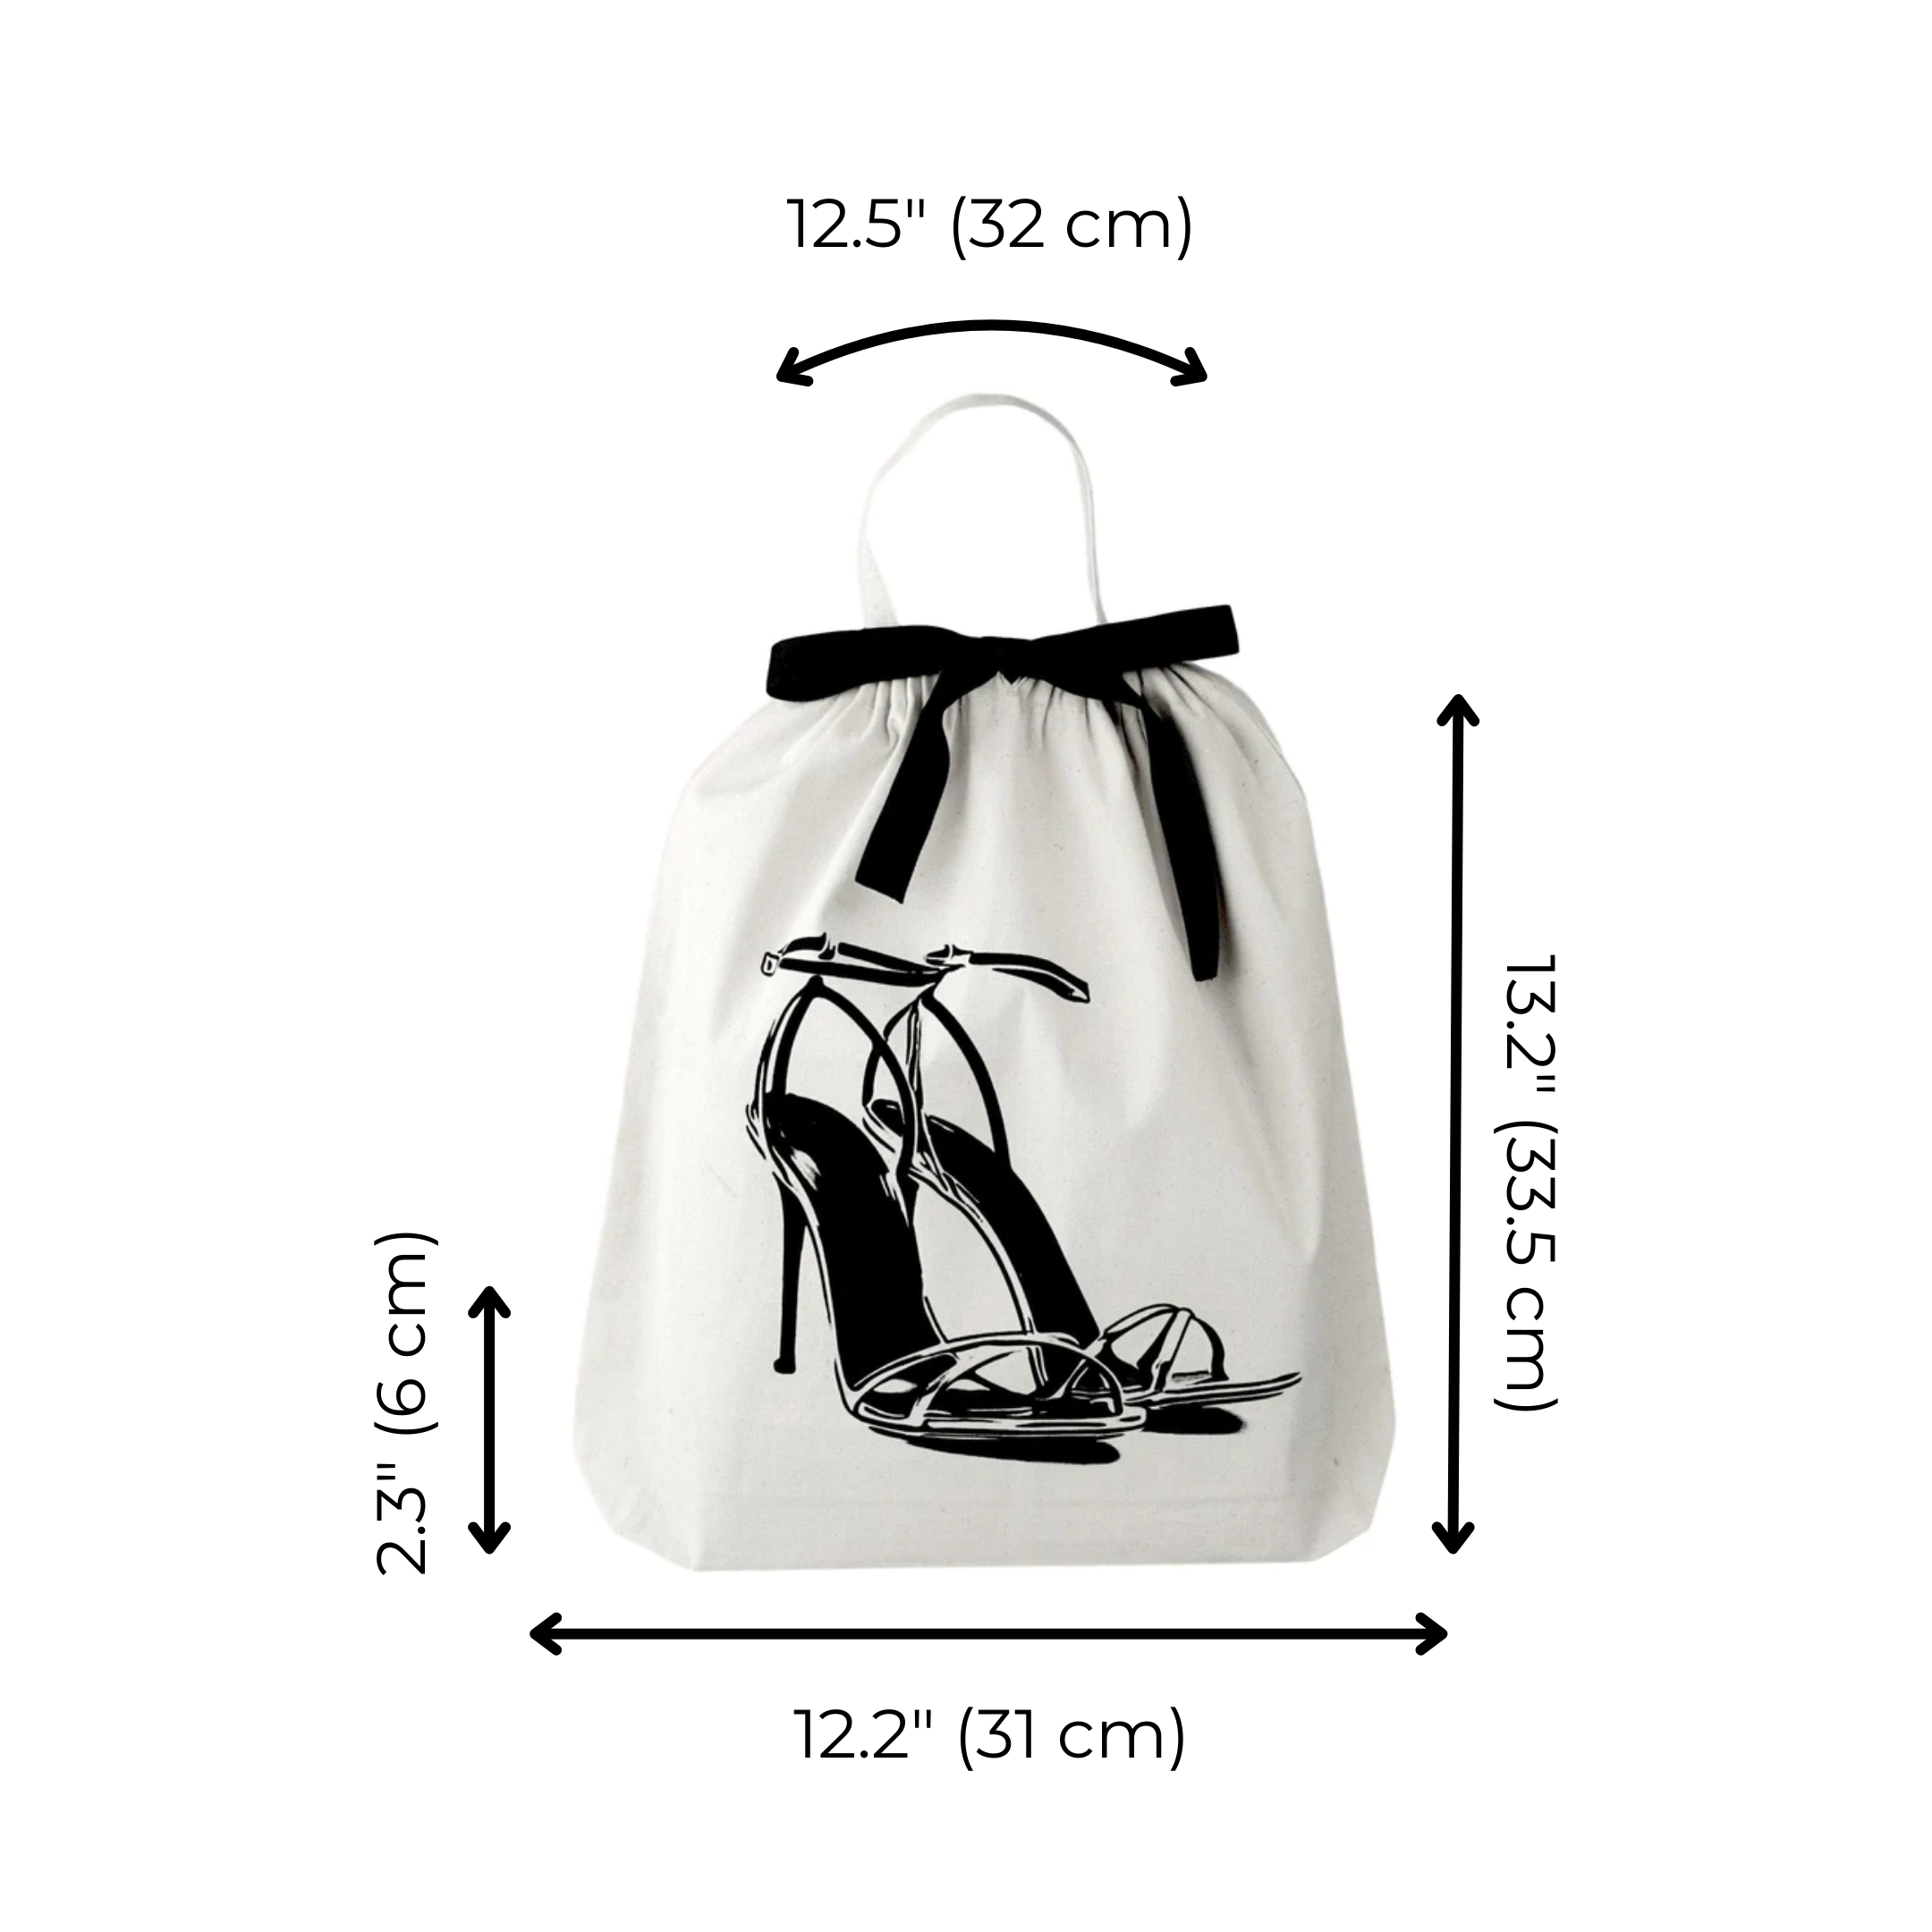 High Heel Sandal Shoe Bag, Cream | Bag-all